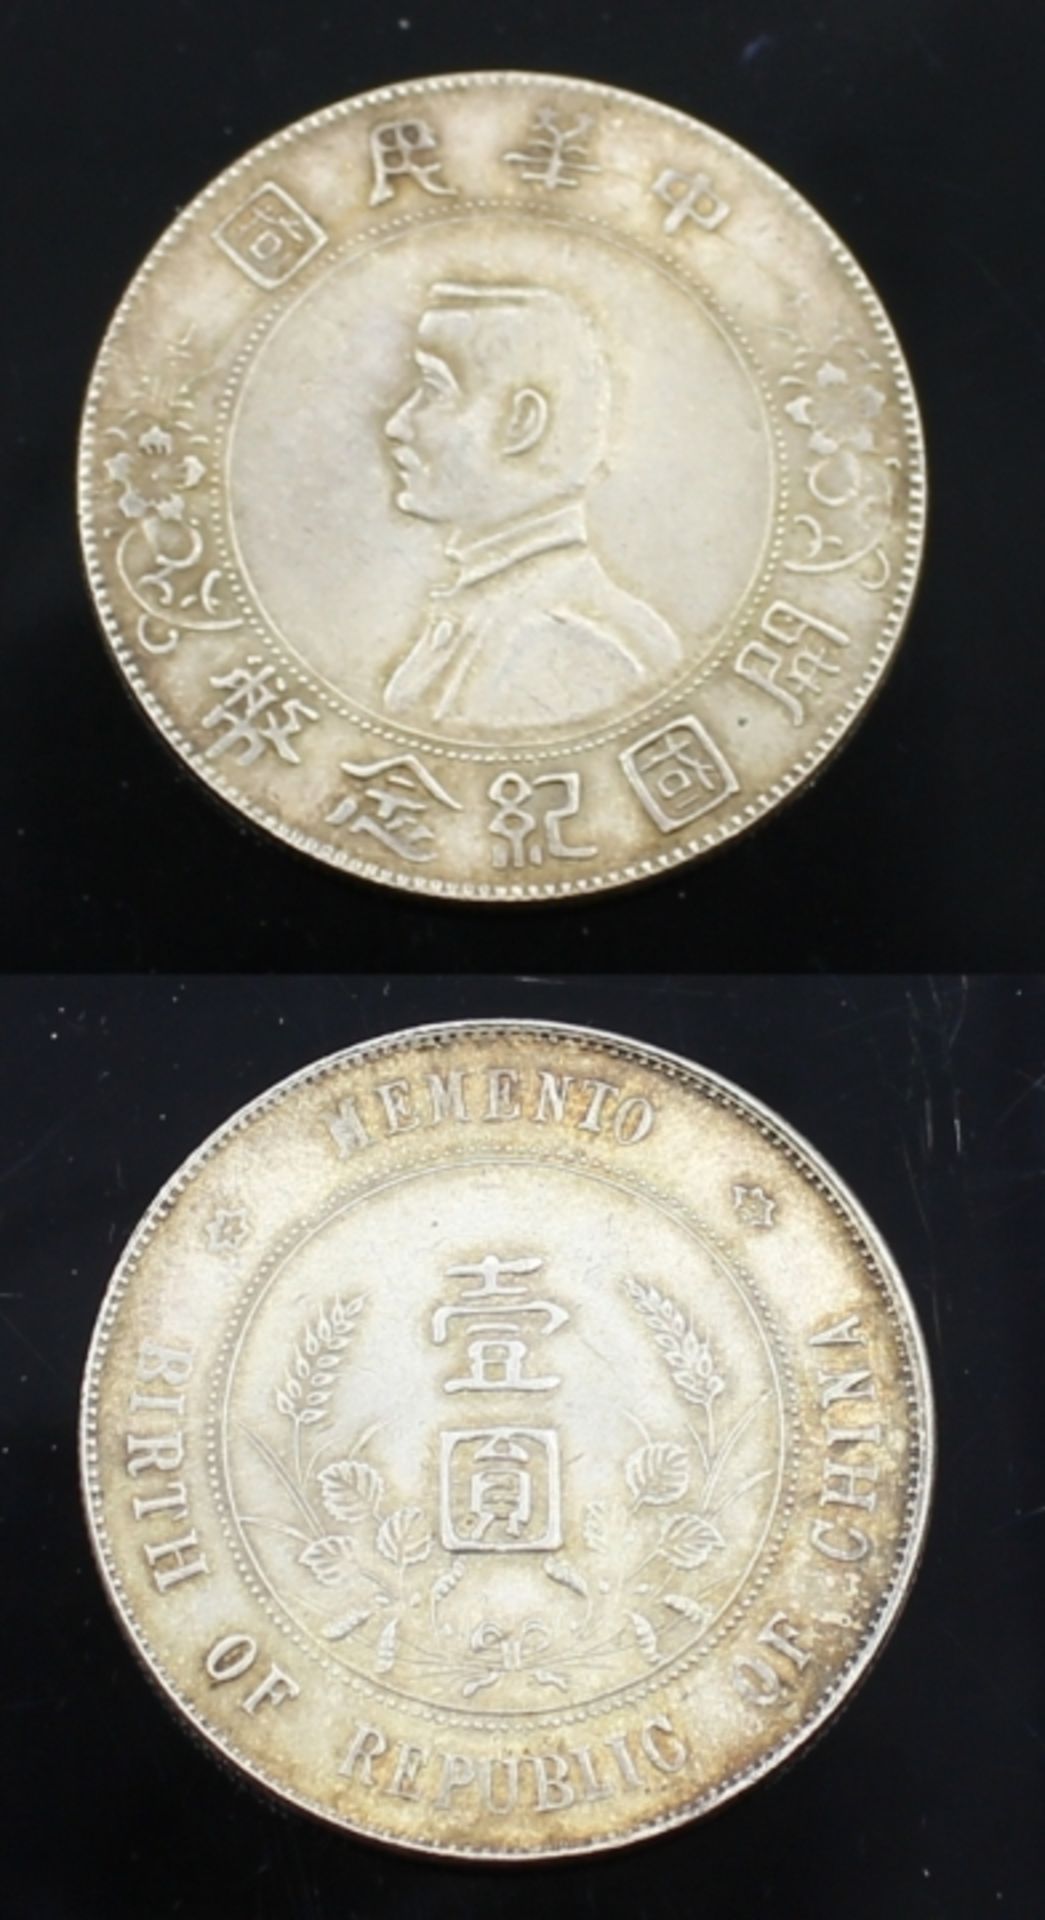 Münze - 1 Dollar Rep. China 1927, Memento Birth of Rep. China, Silber, d.= 38,75 mm, ca. 26,9 Gramm